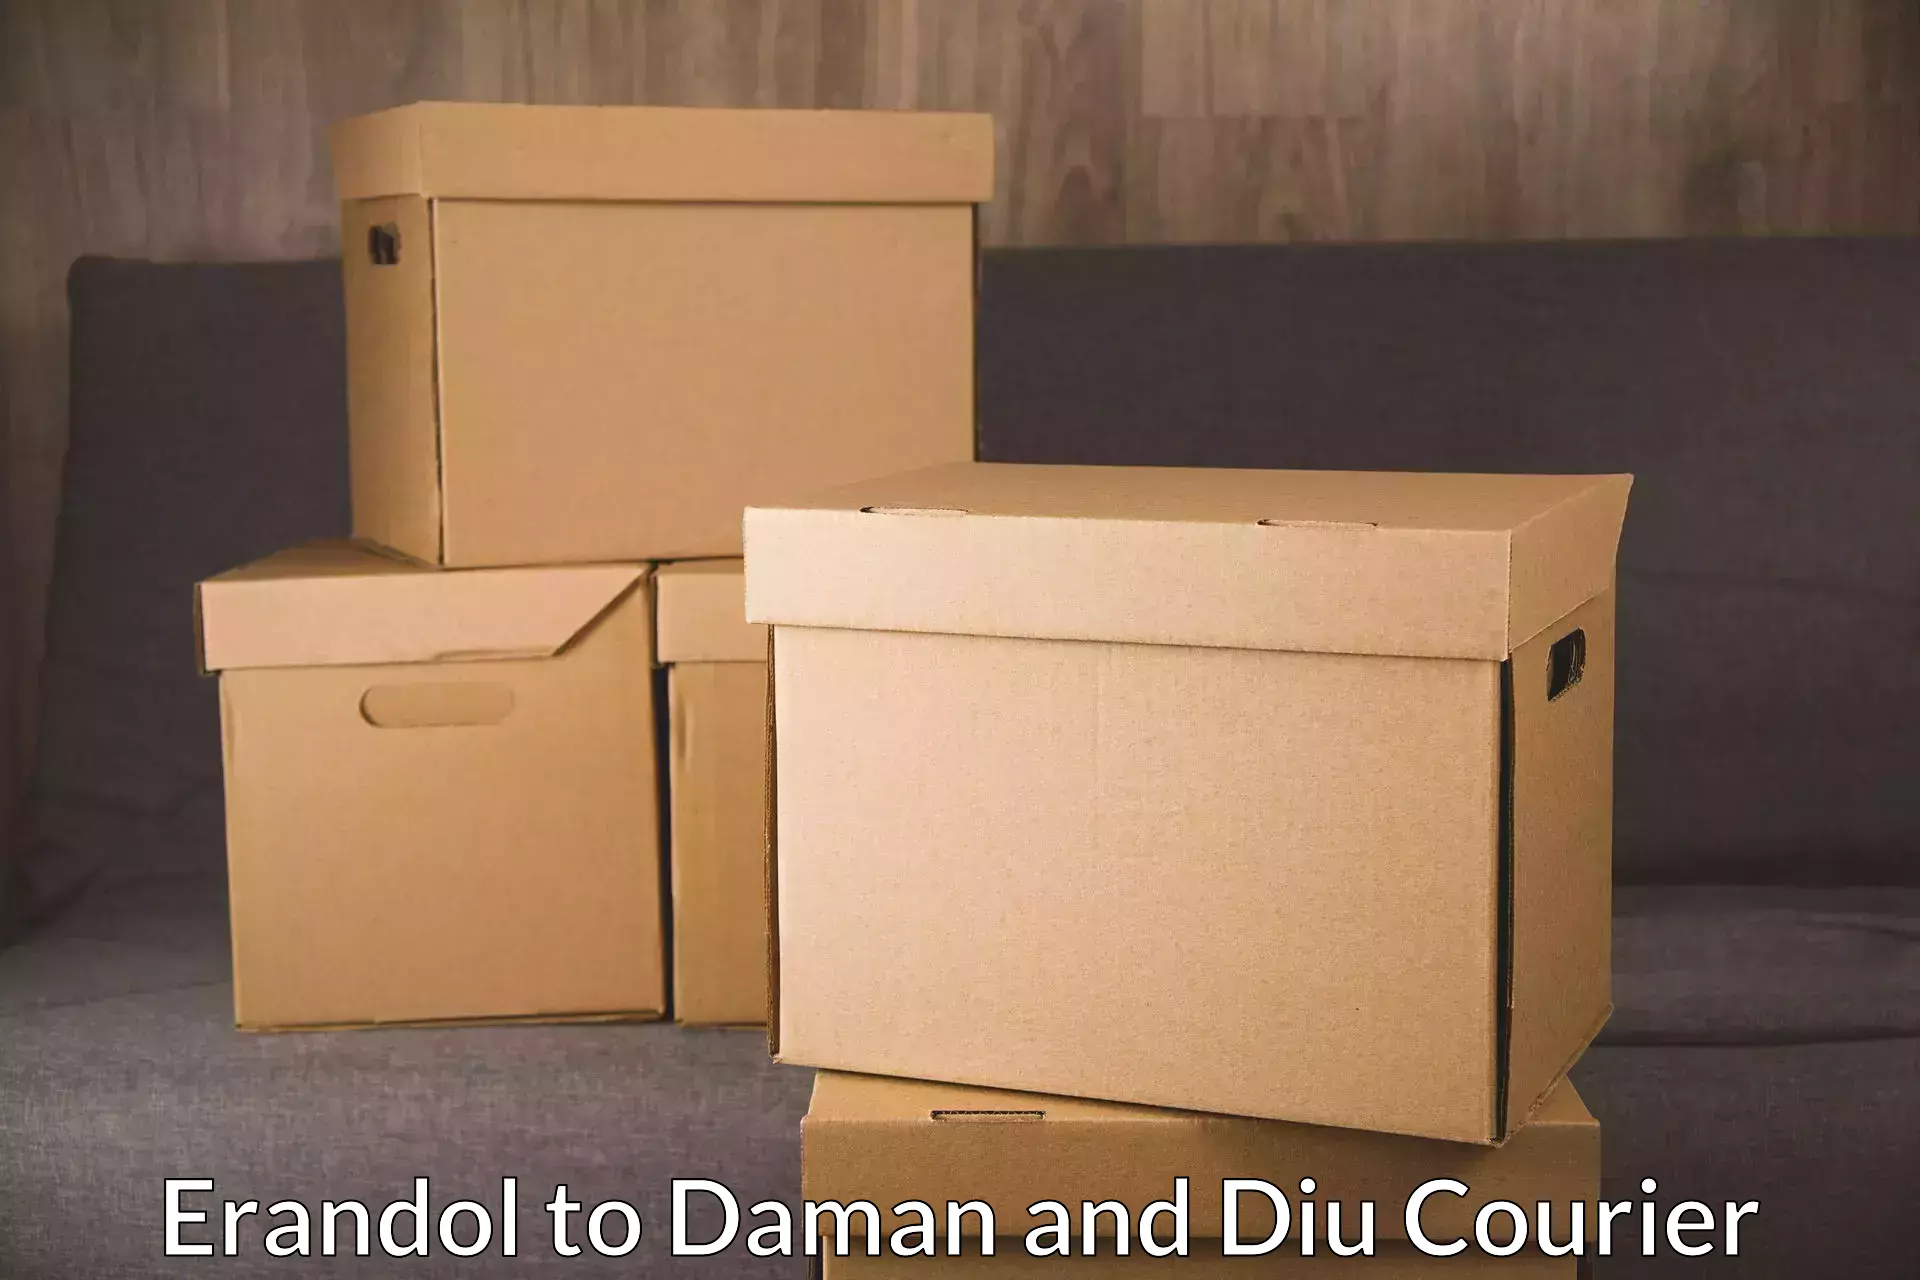 Urgent courier needs Erandol to Daman and Diu